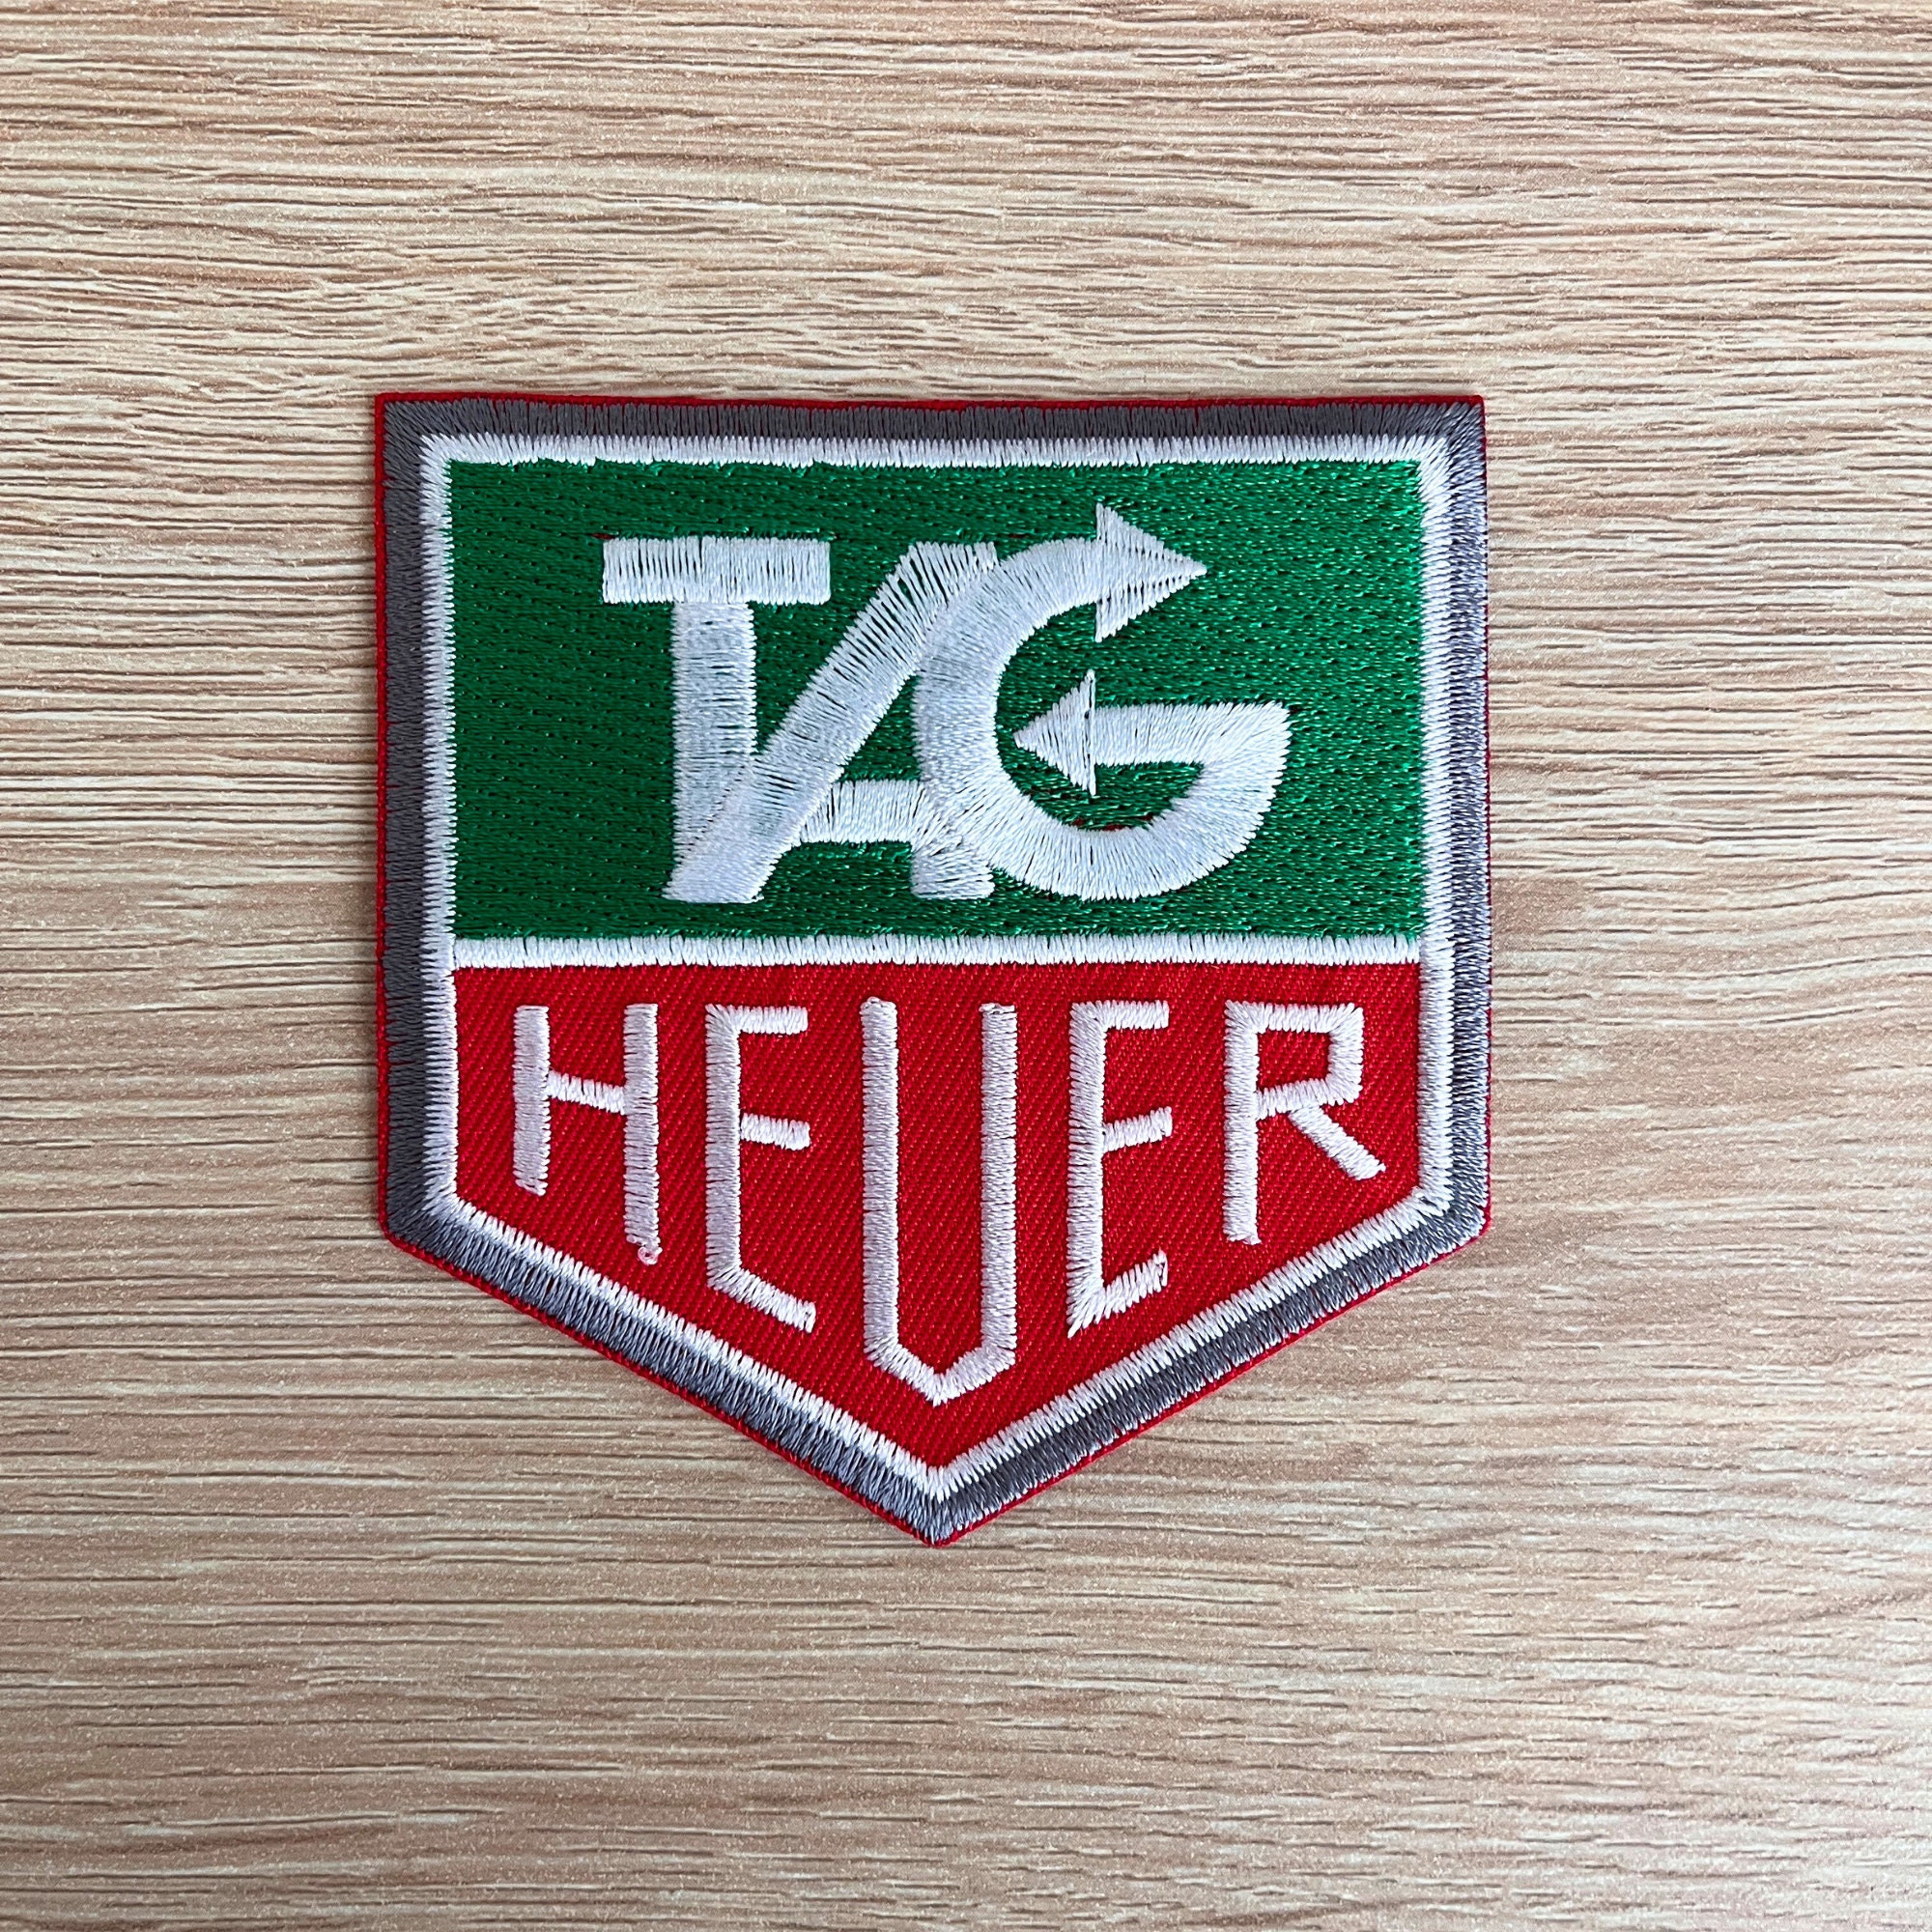 Tag Heuer Patch / Classic Watch Logo Patch / Formula One -  Ireland